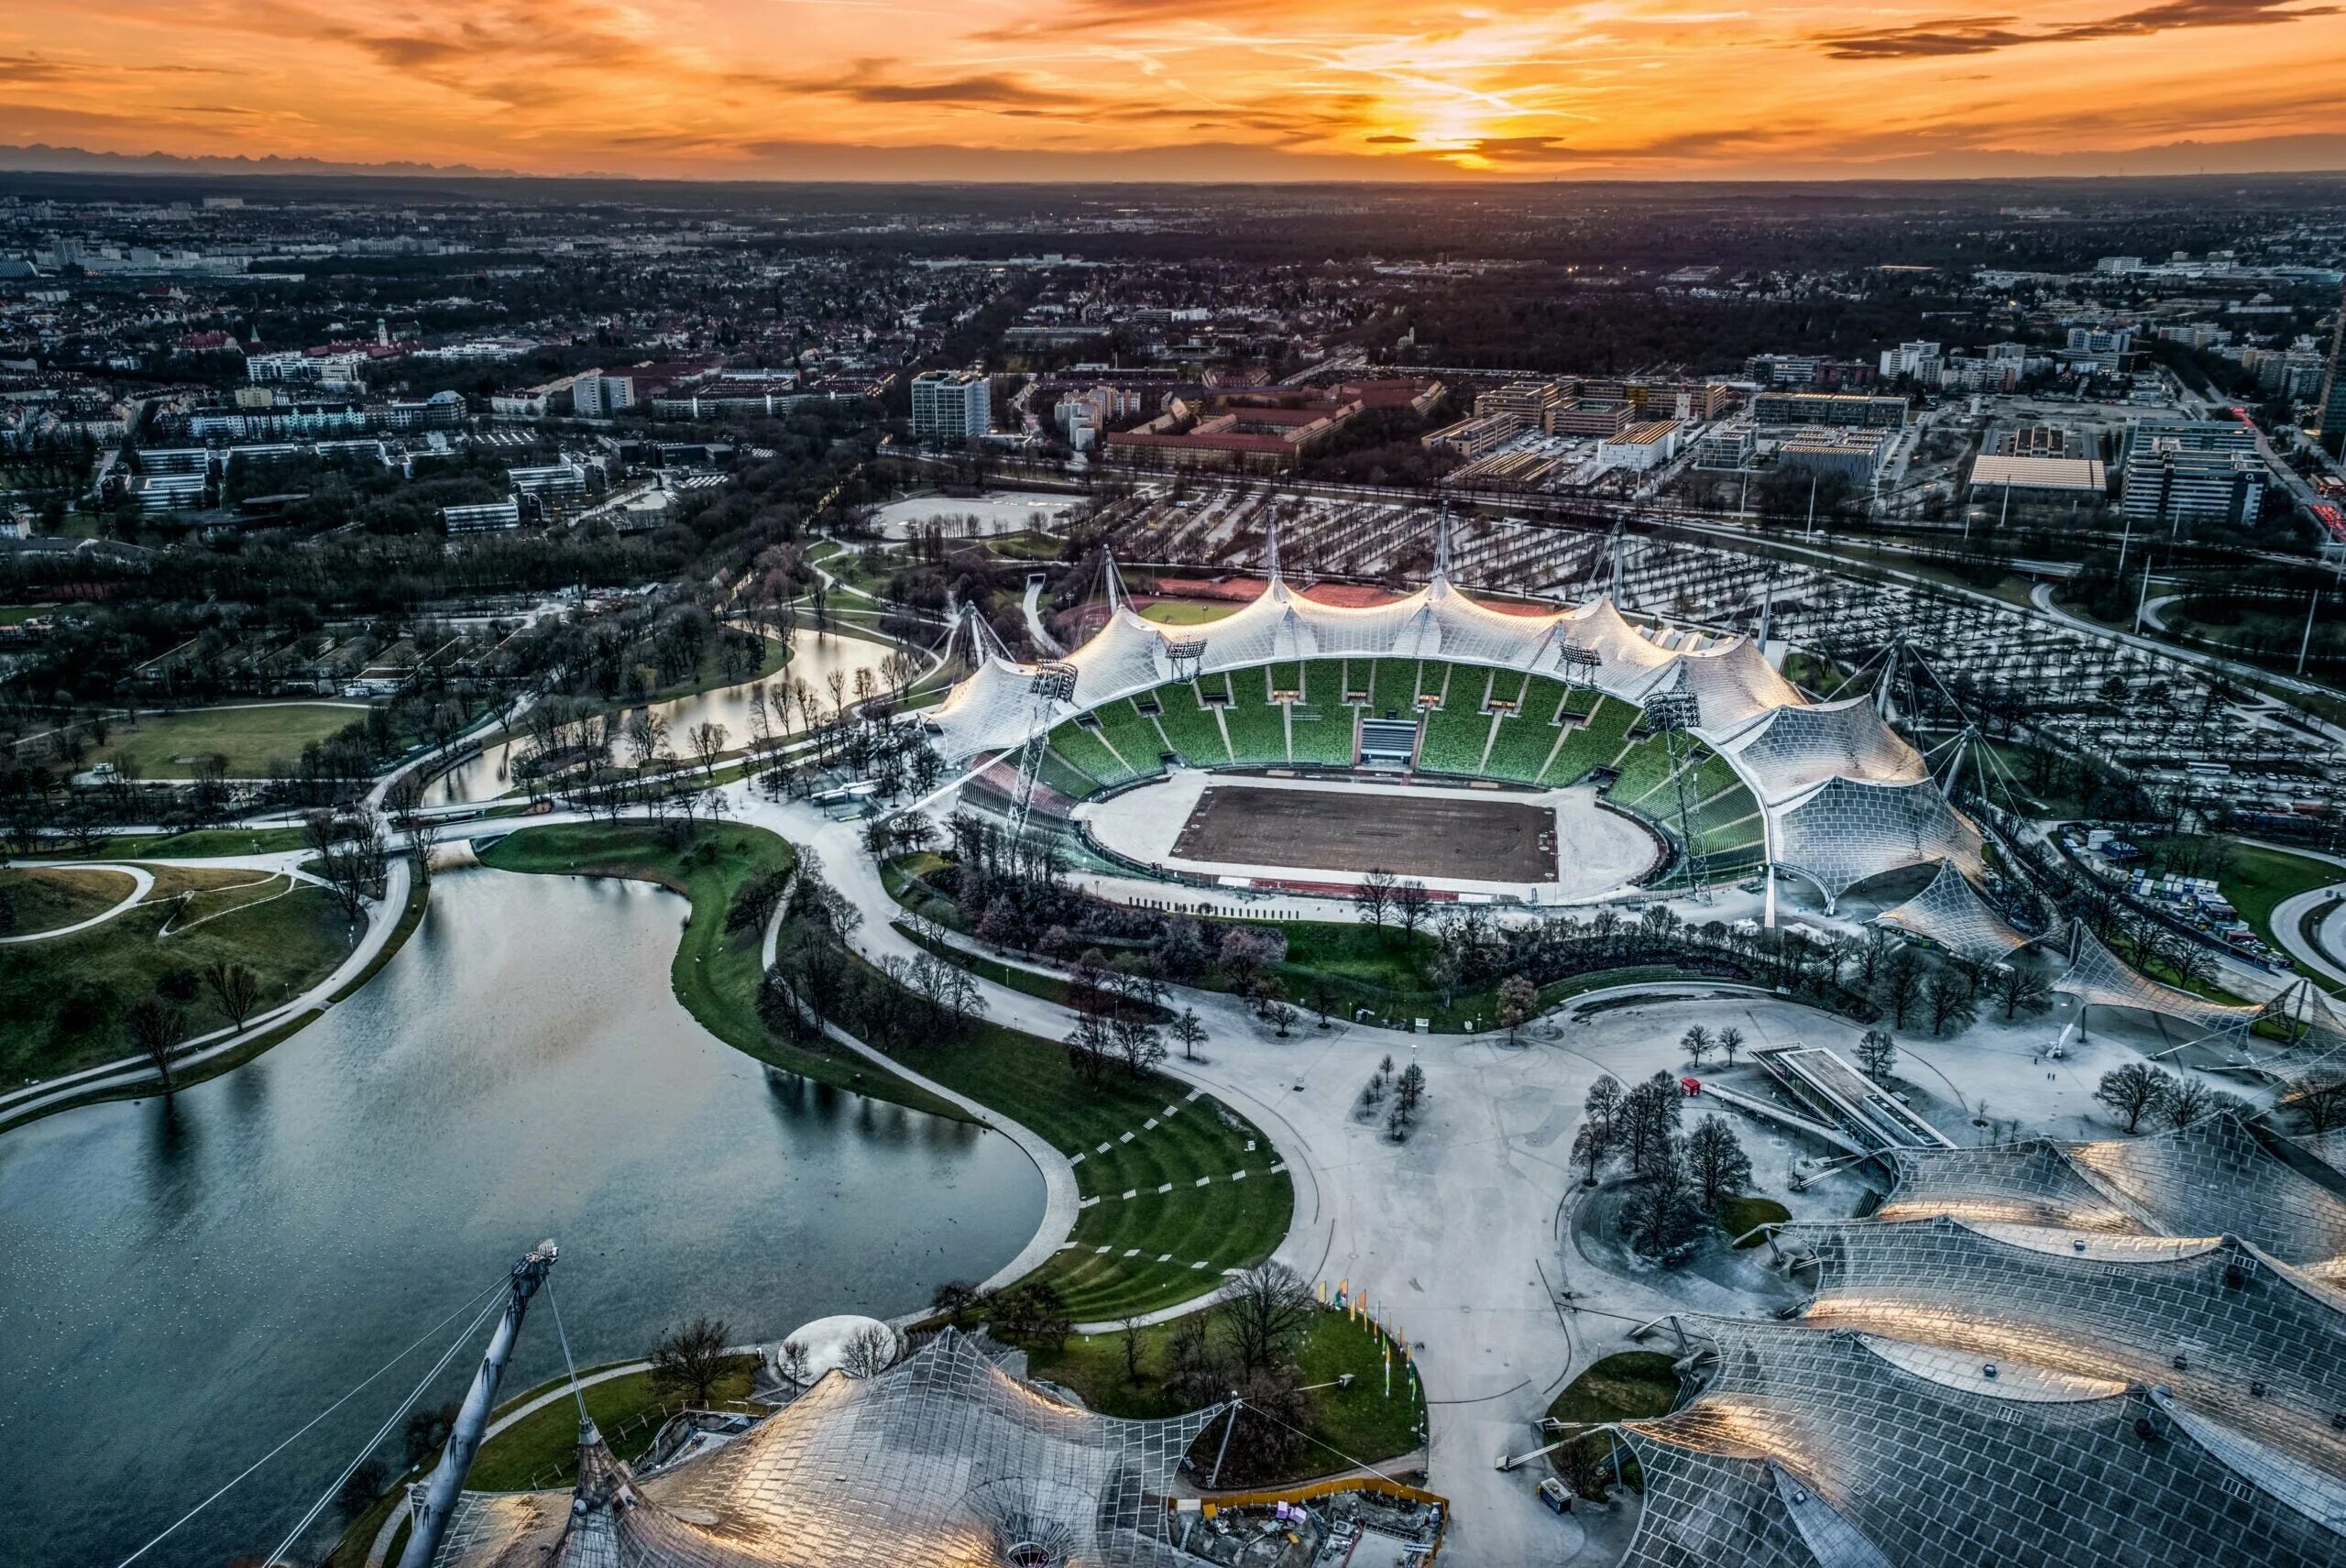 Olympic stadium. Олимпиаштадион Мюнхен. Олимпийский парк Мюнхен. Стадион Олимпия Мюнхен. Олимпийский стадион Мюнхена, Германия.